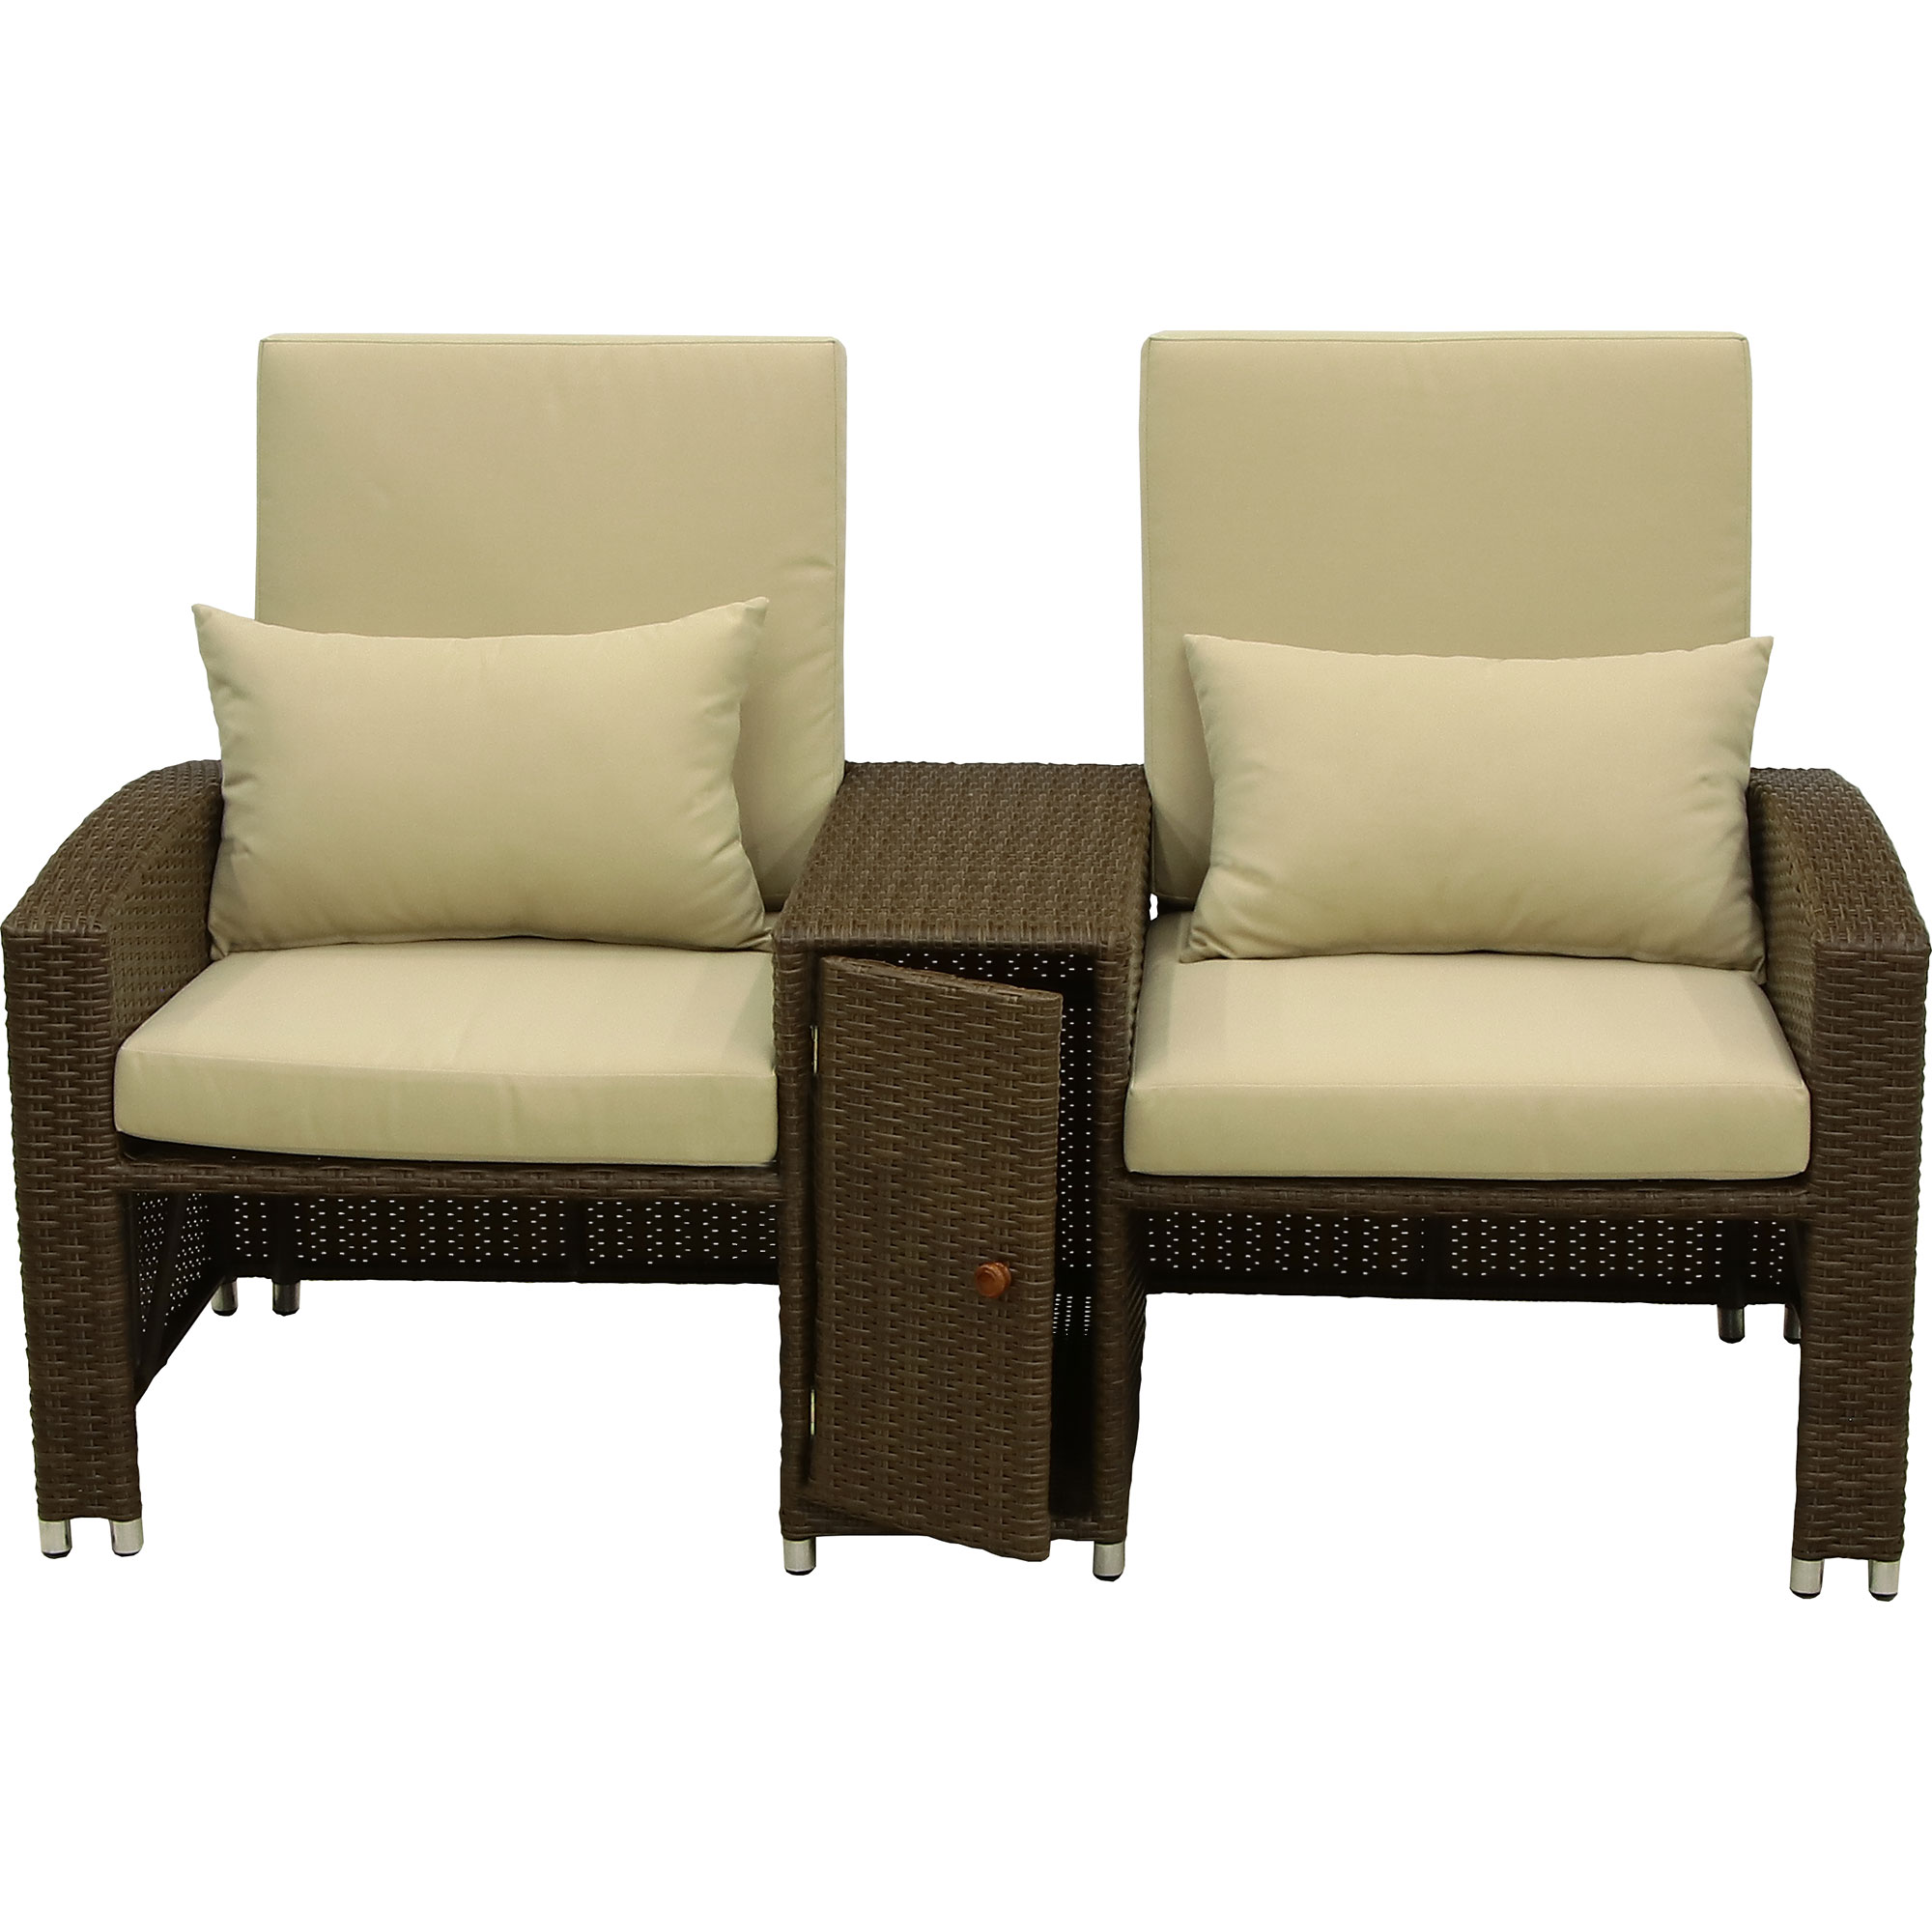 Комплект мебели Ronica Deli коричневый 4 предмета, цвет светло-коричневый, размер 74х164х100 - фото 4